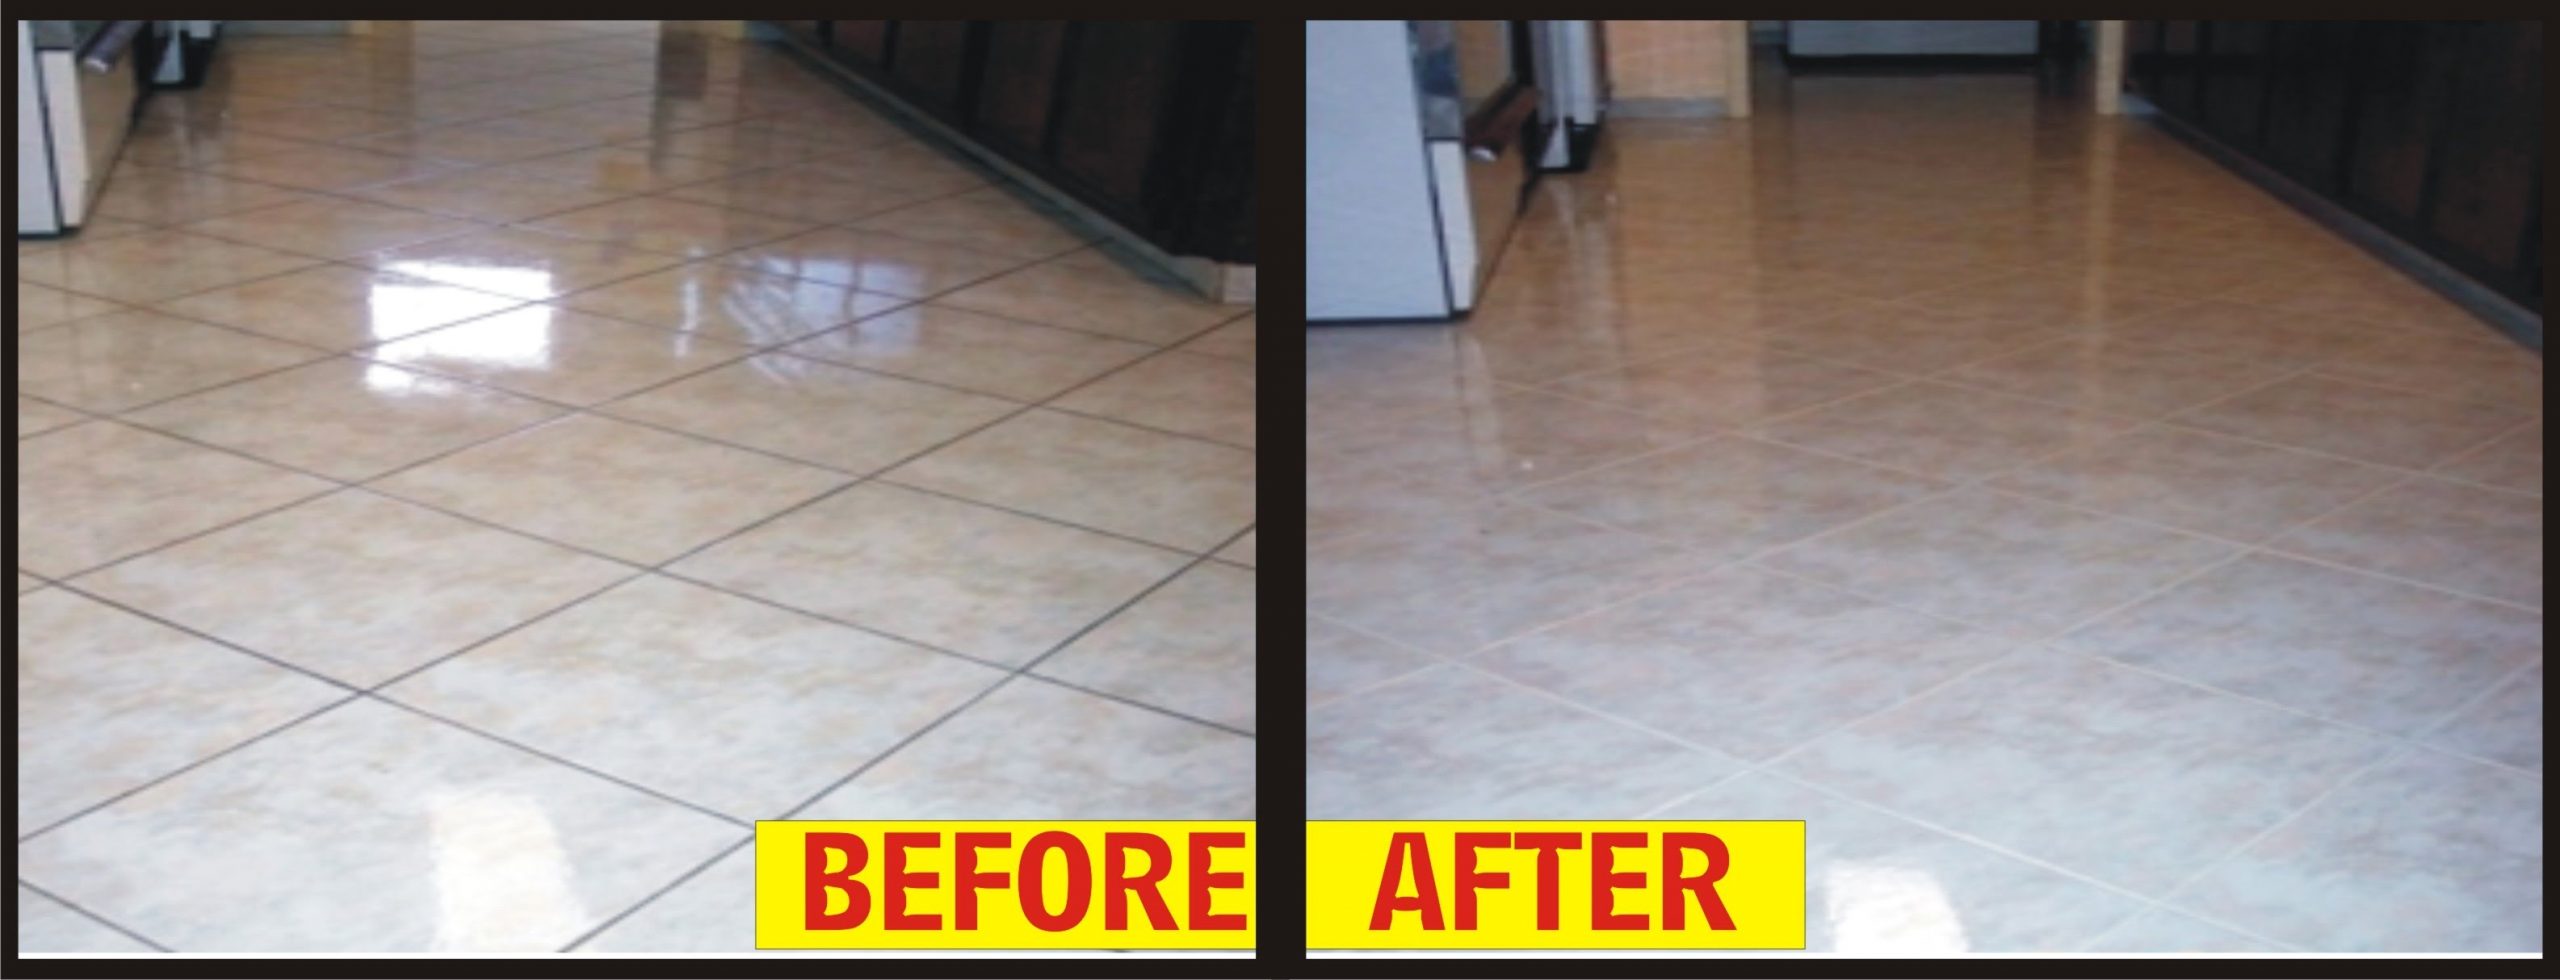 How do you clean tile floors with vinegar?